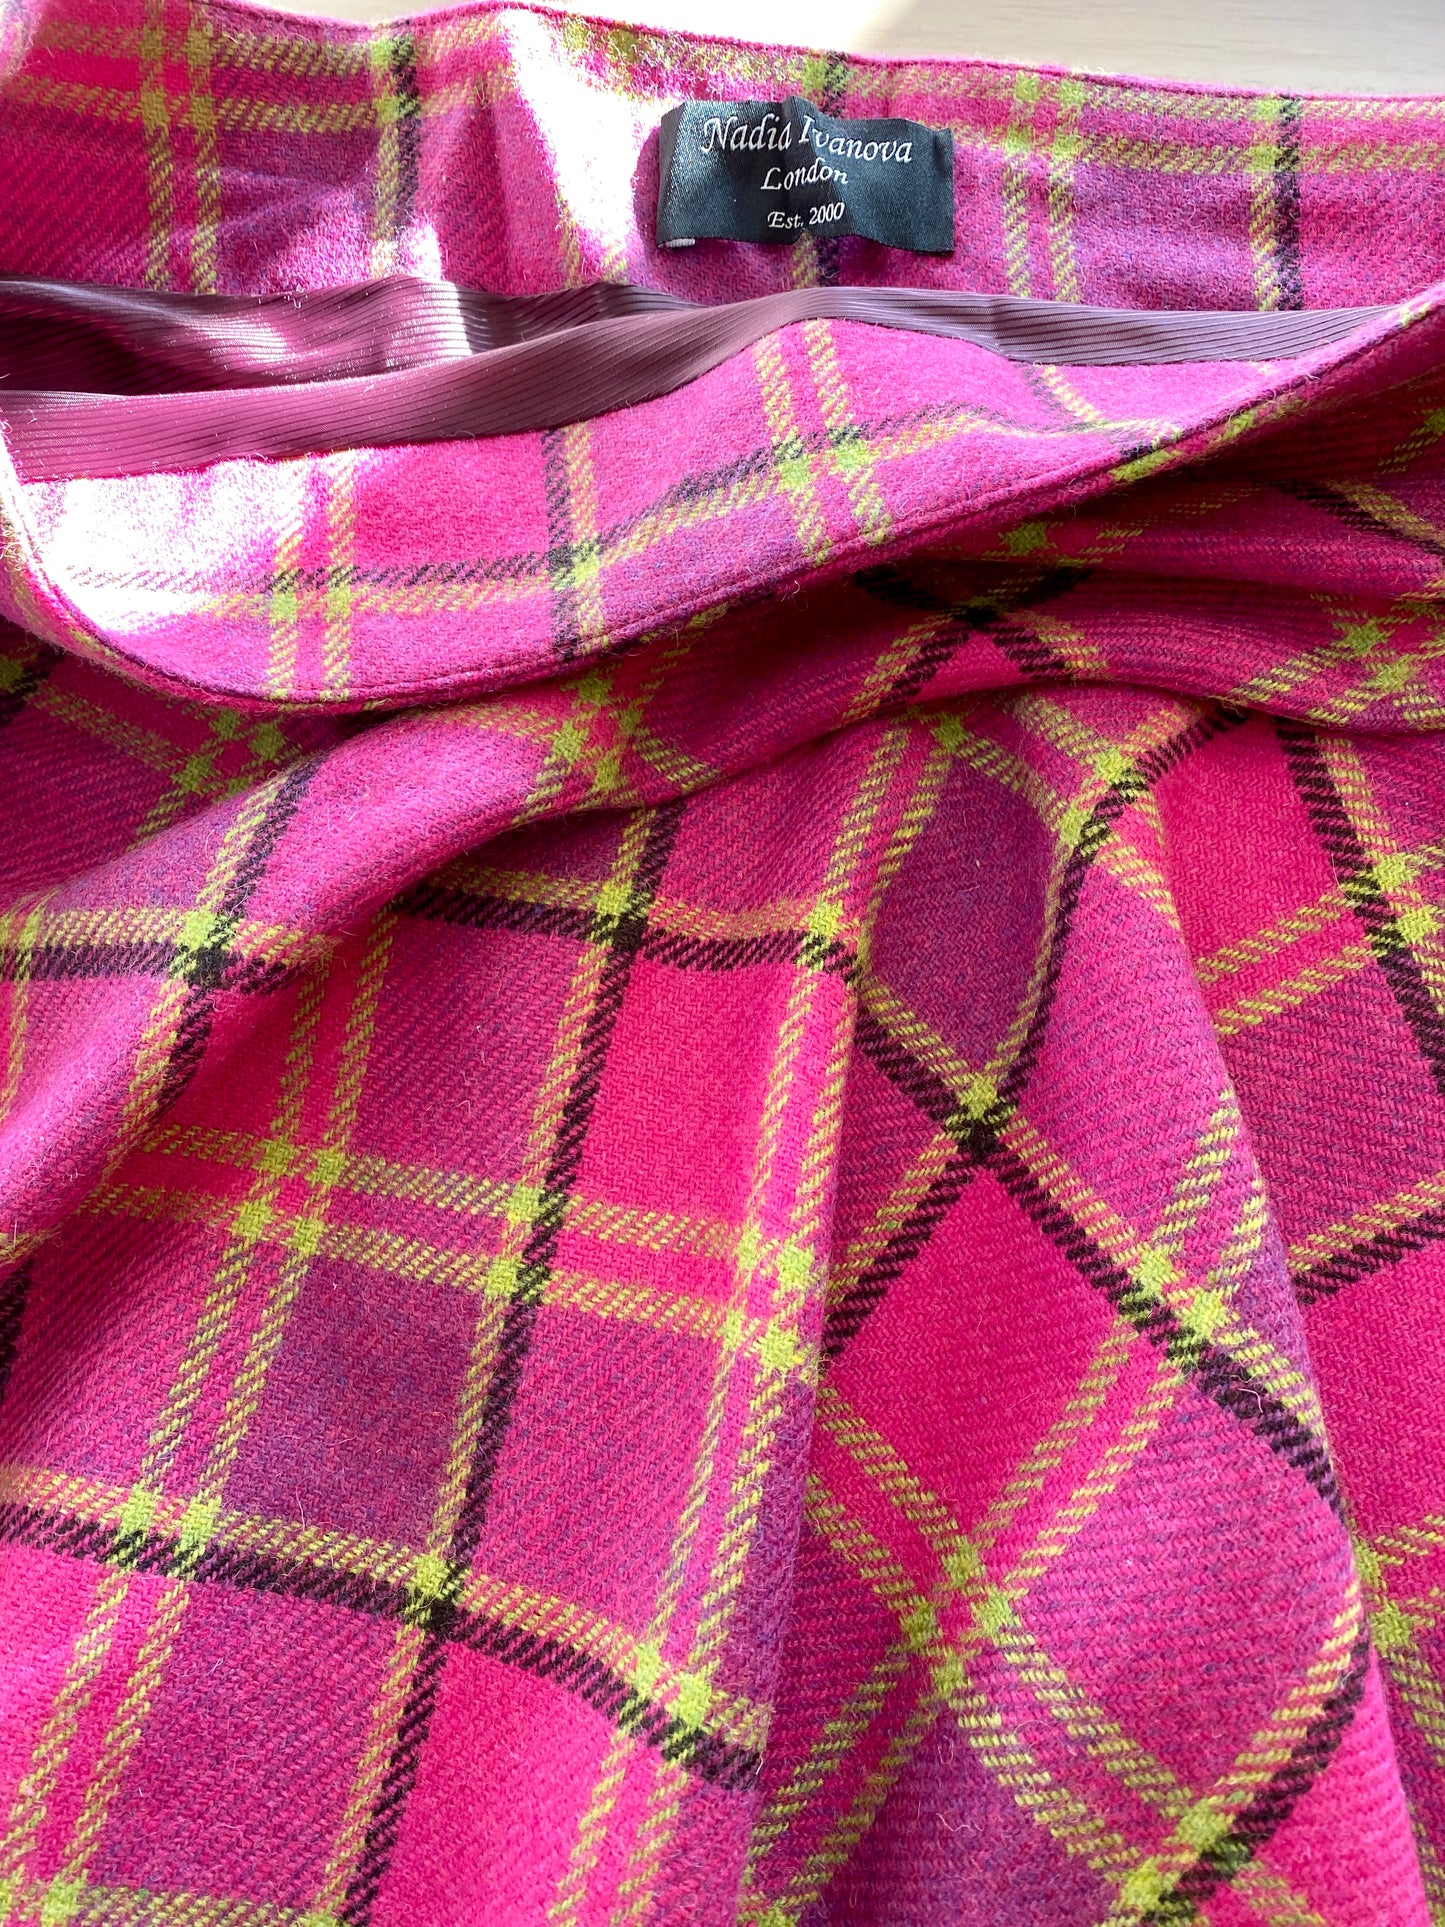 Flamenco style skirt ,Wool check skirt in pink,Size18 skirt